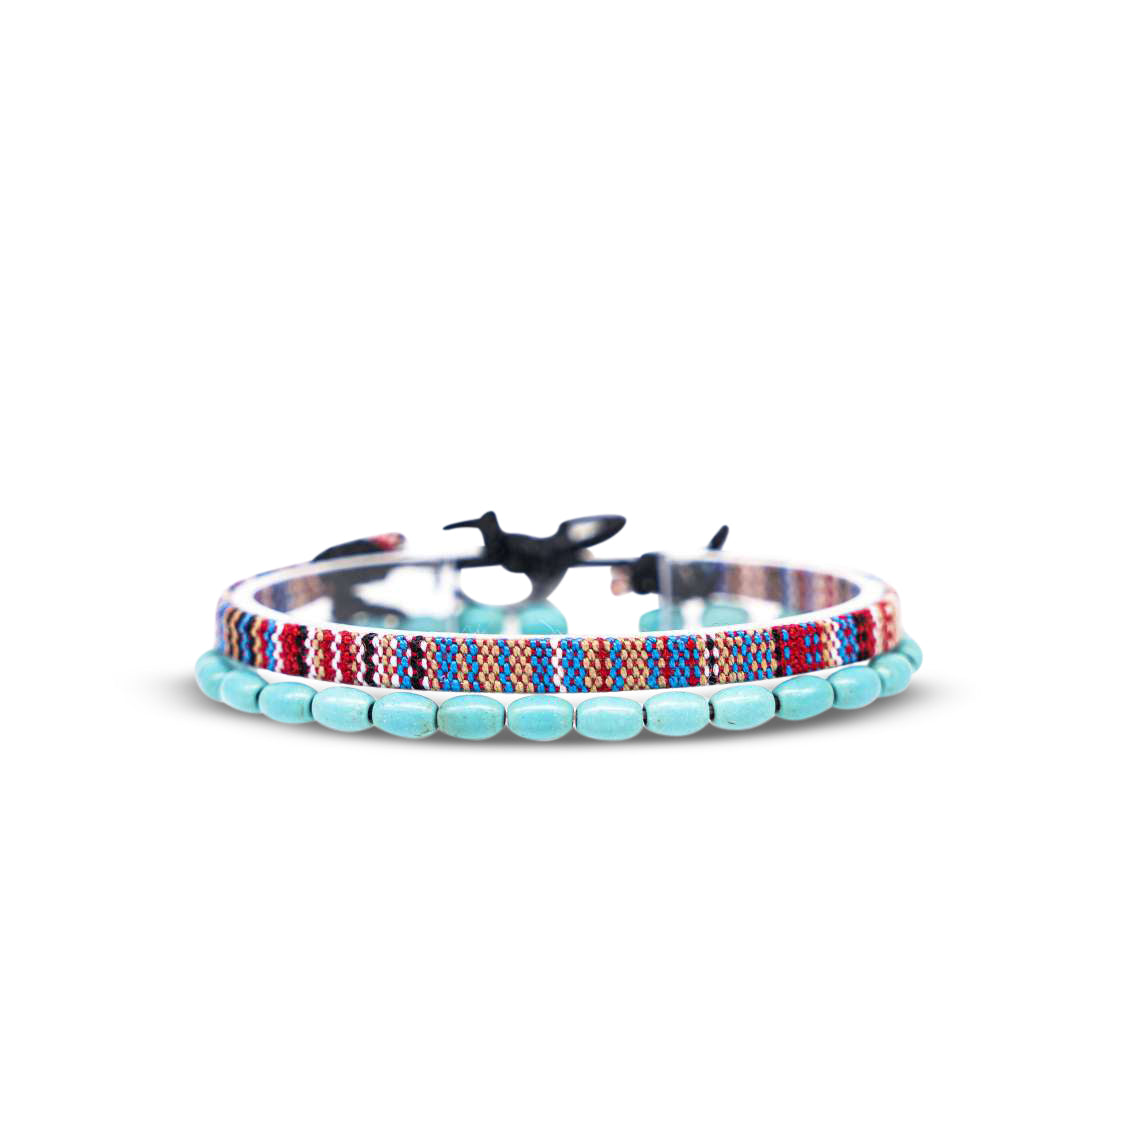 2x Boho Surfer Bracelet -  Multi & Turquoise Beads